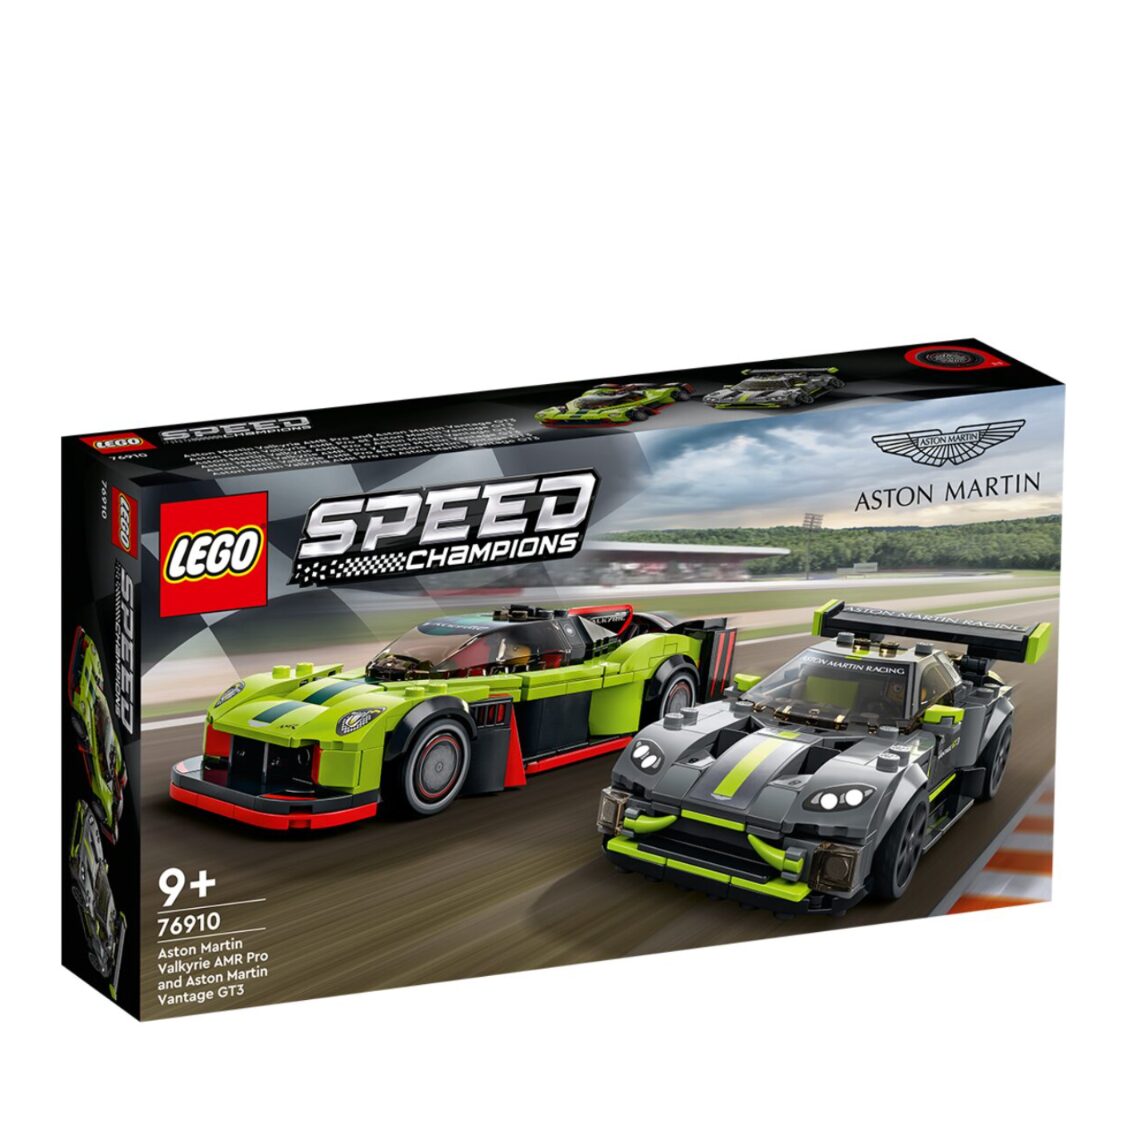 LEGO Aston Martin Valkyrie AMR Proand Aston Martin Vantage GT3 76910